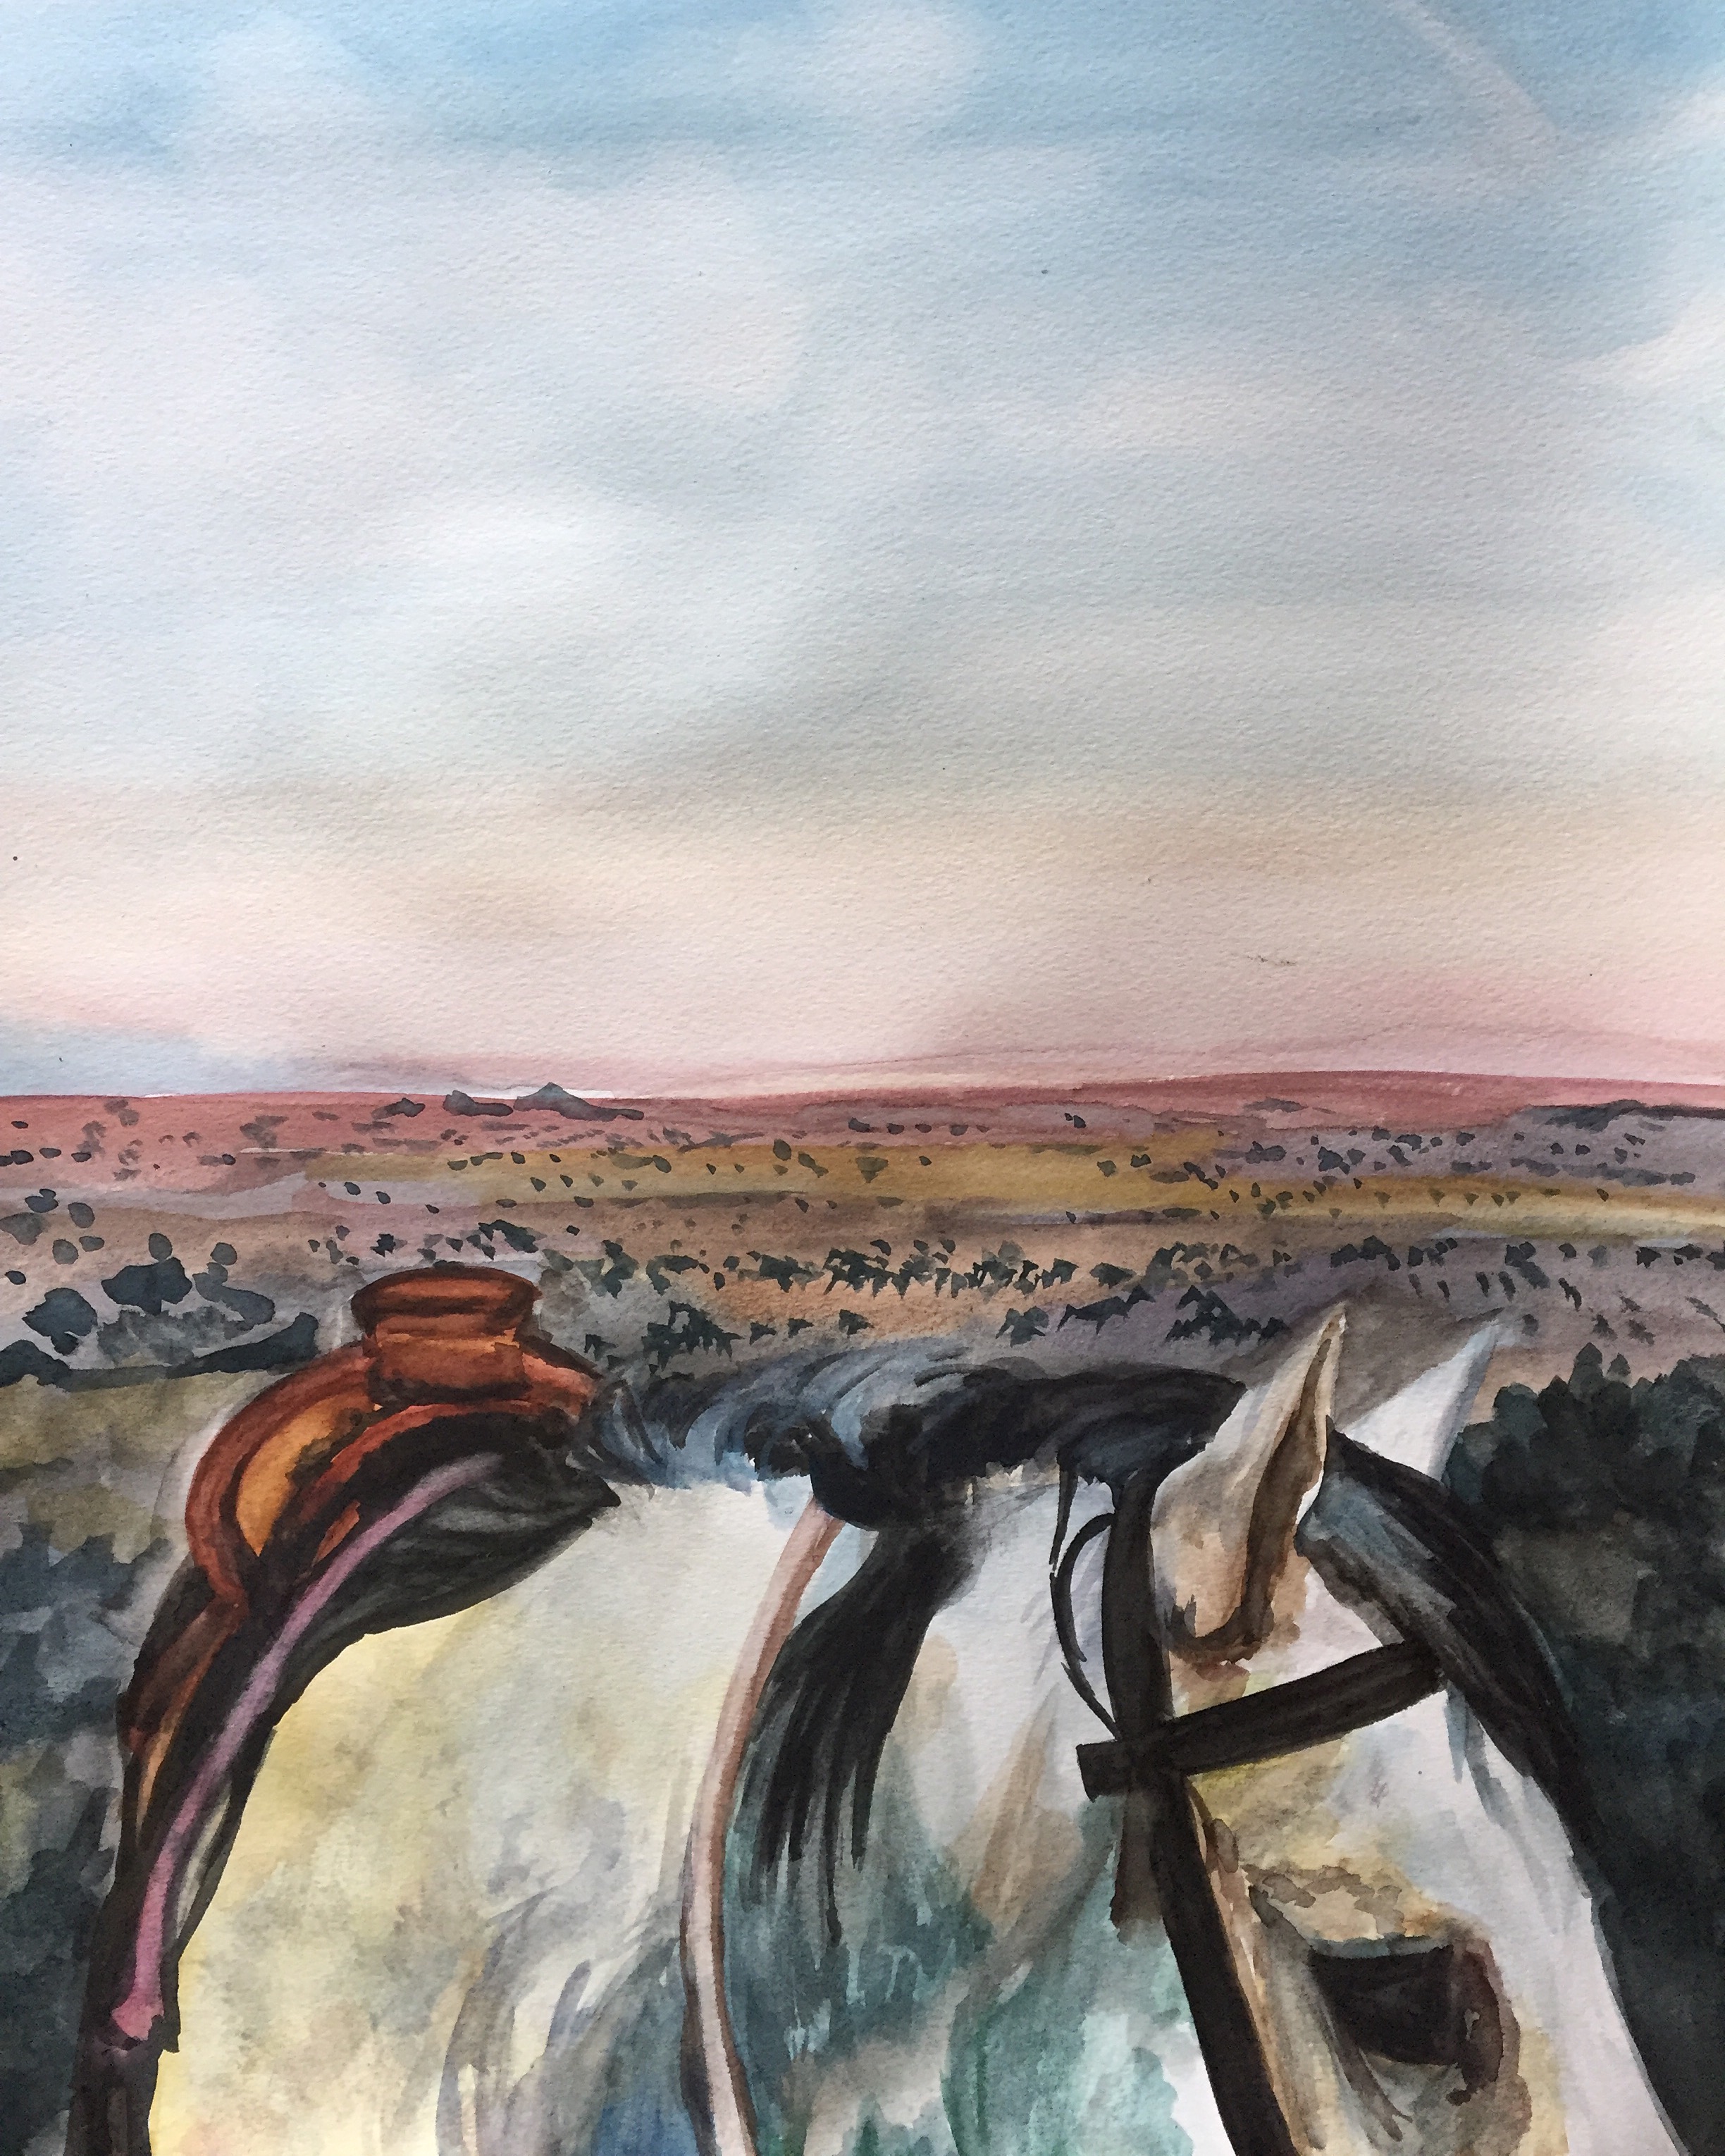 White Horse Sunset